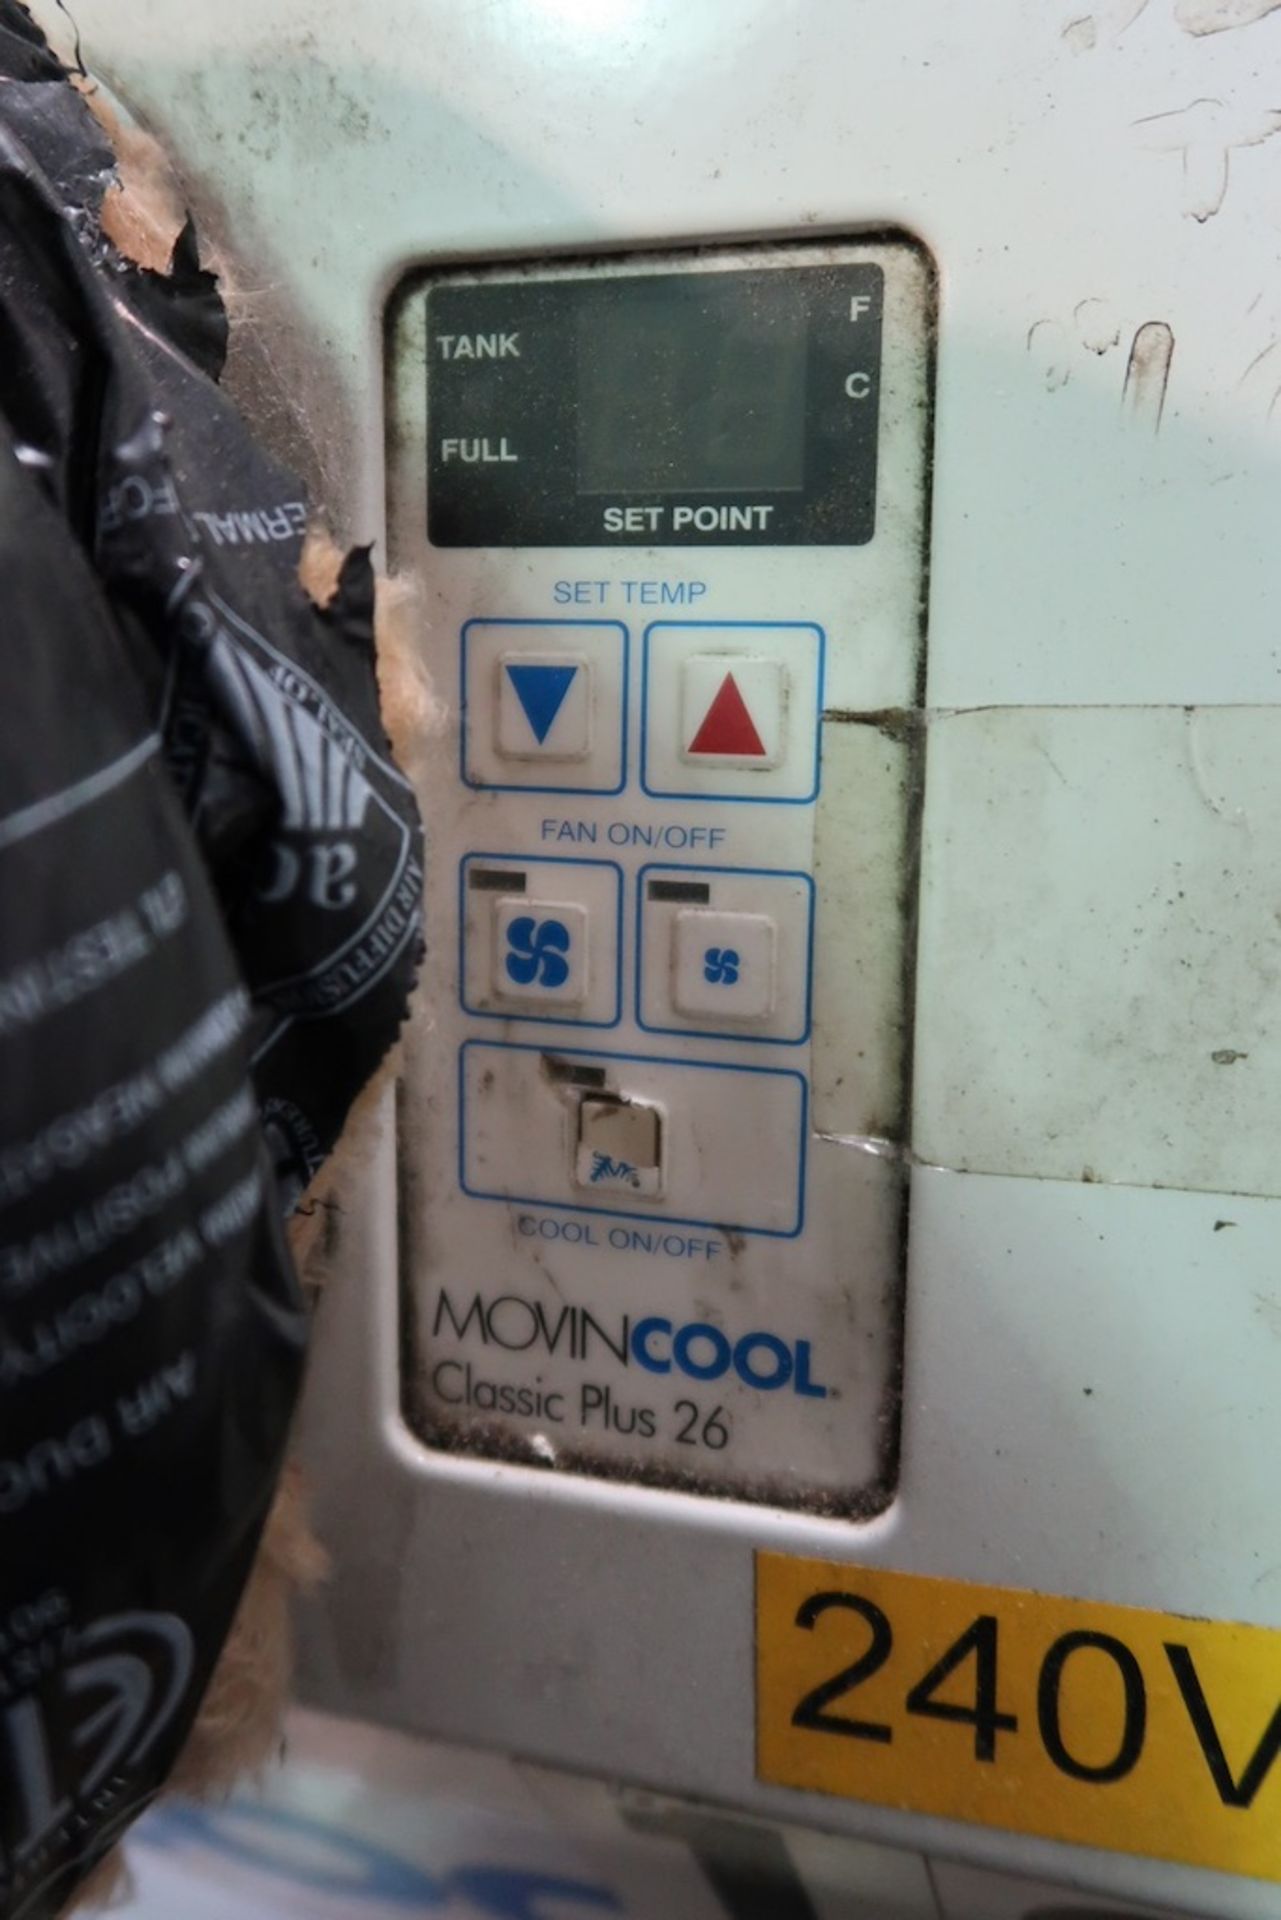 MovinCool Classic Plus 26 Portable Air Conditioner - Image 2 of 3